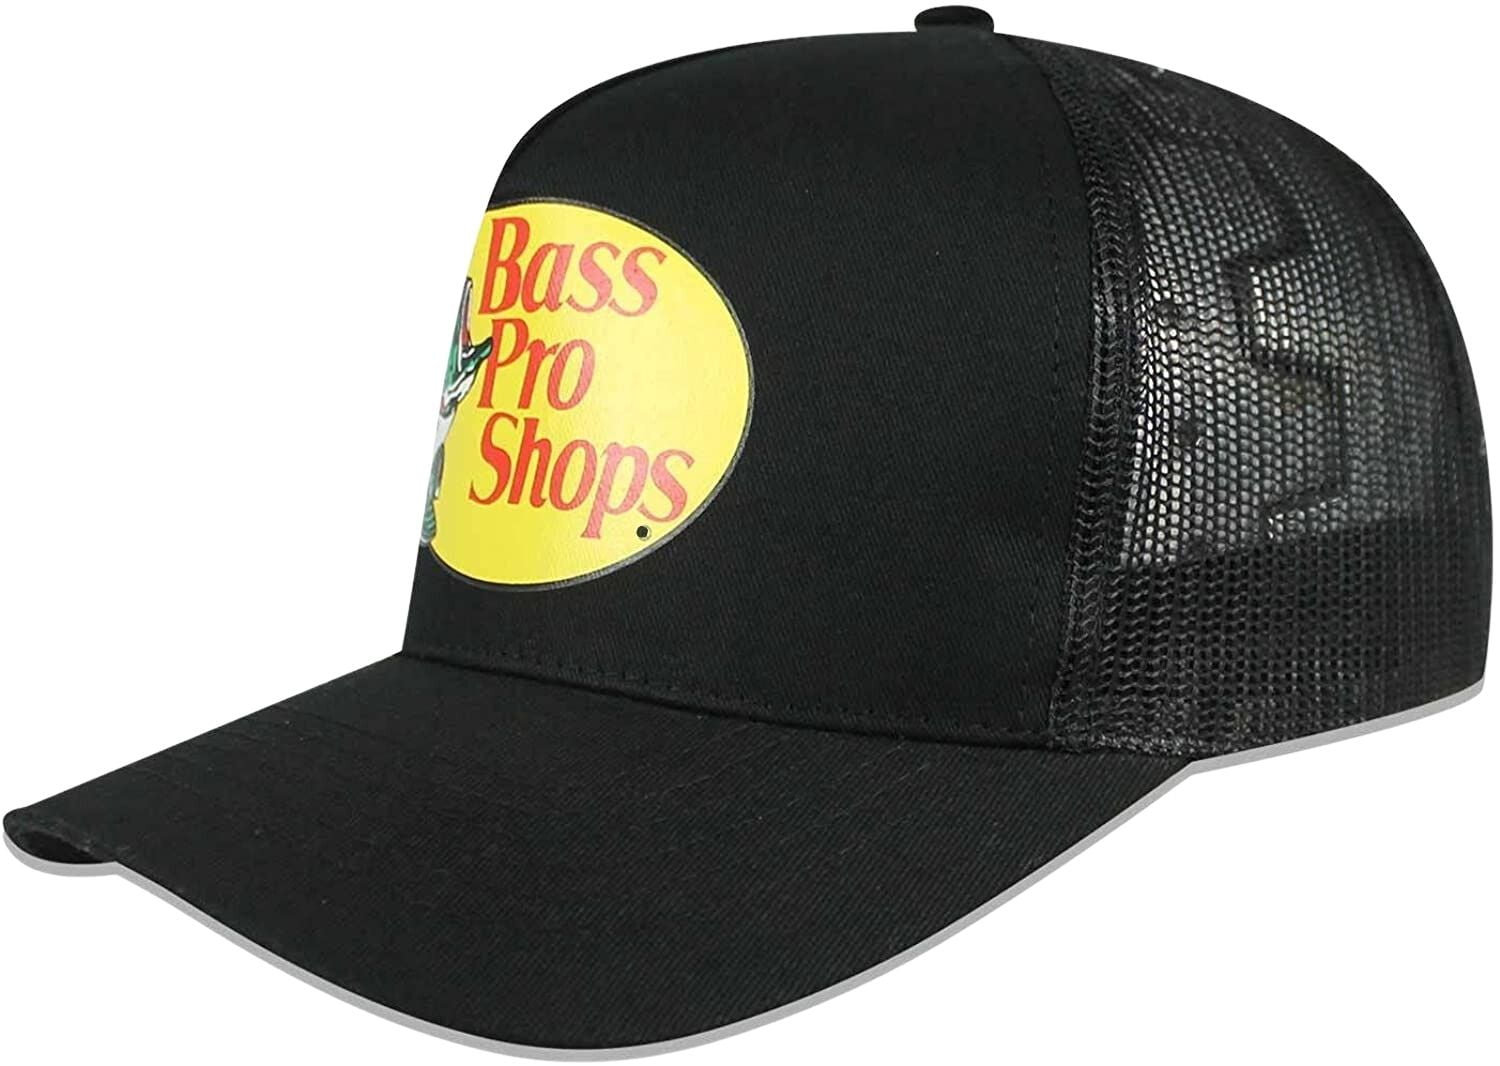 Bass Pro Shop Men's Trucker Hat Mesh Cap - One Size Fits All